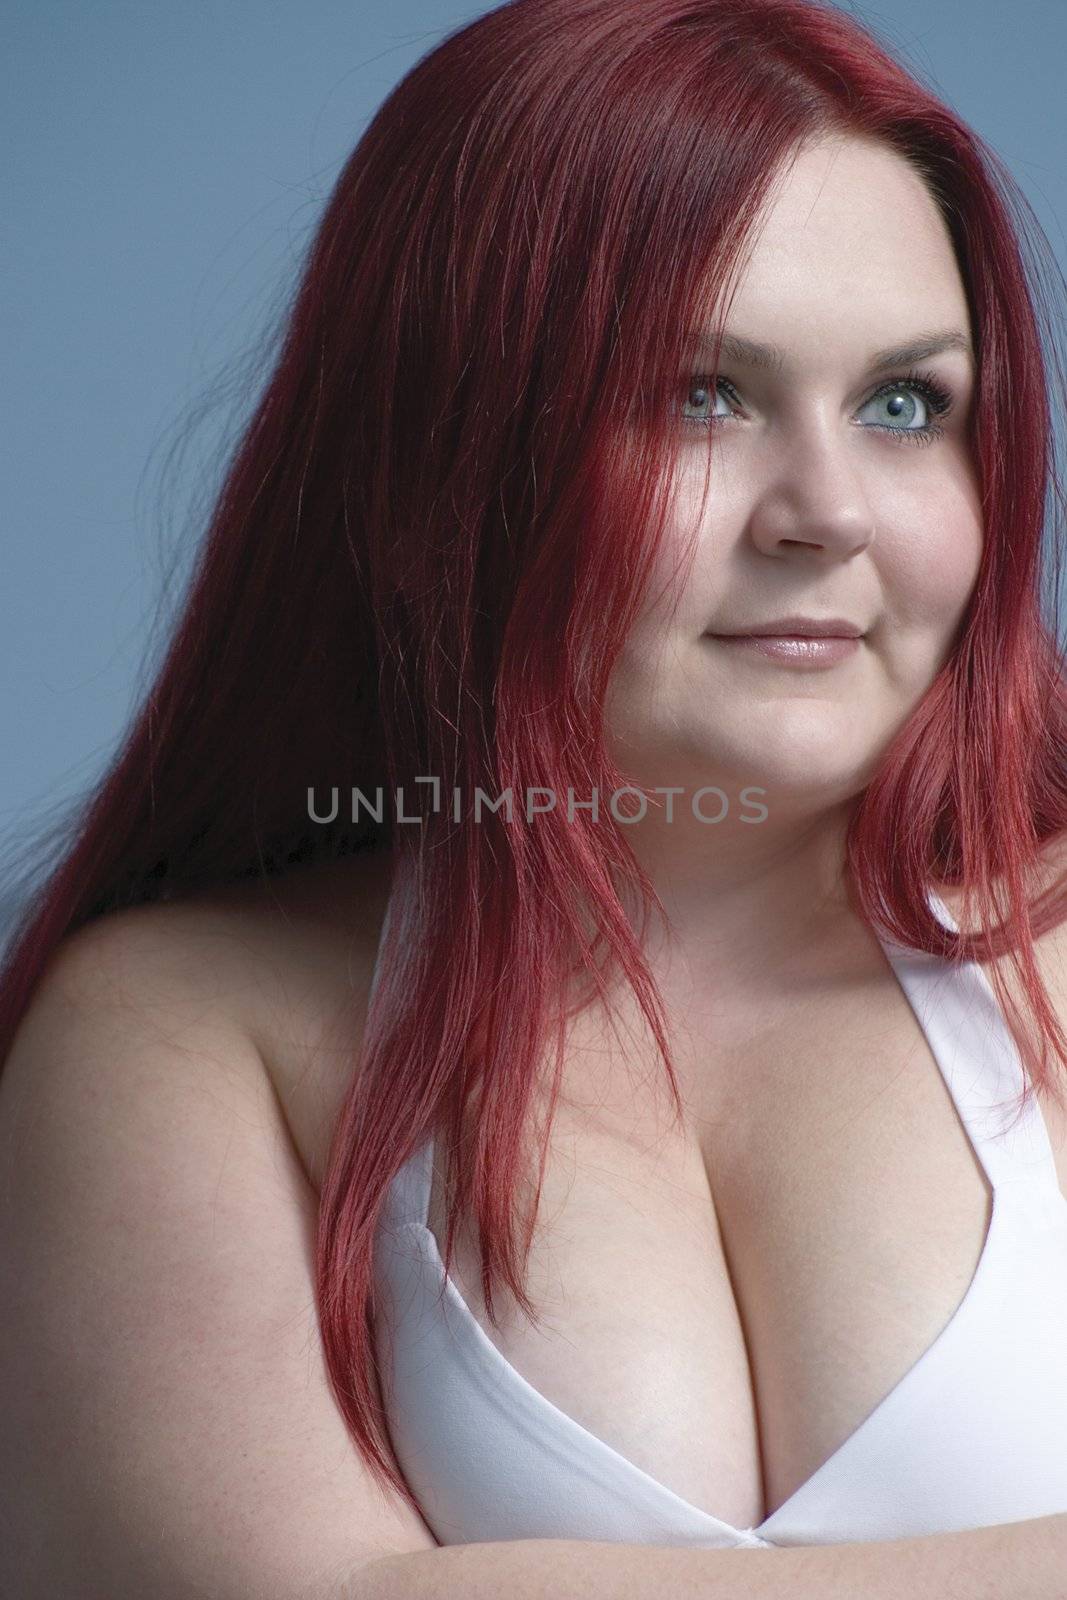 Twenty something model with bright red hair